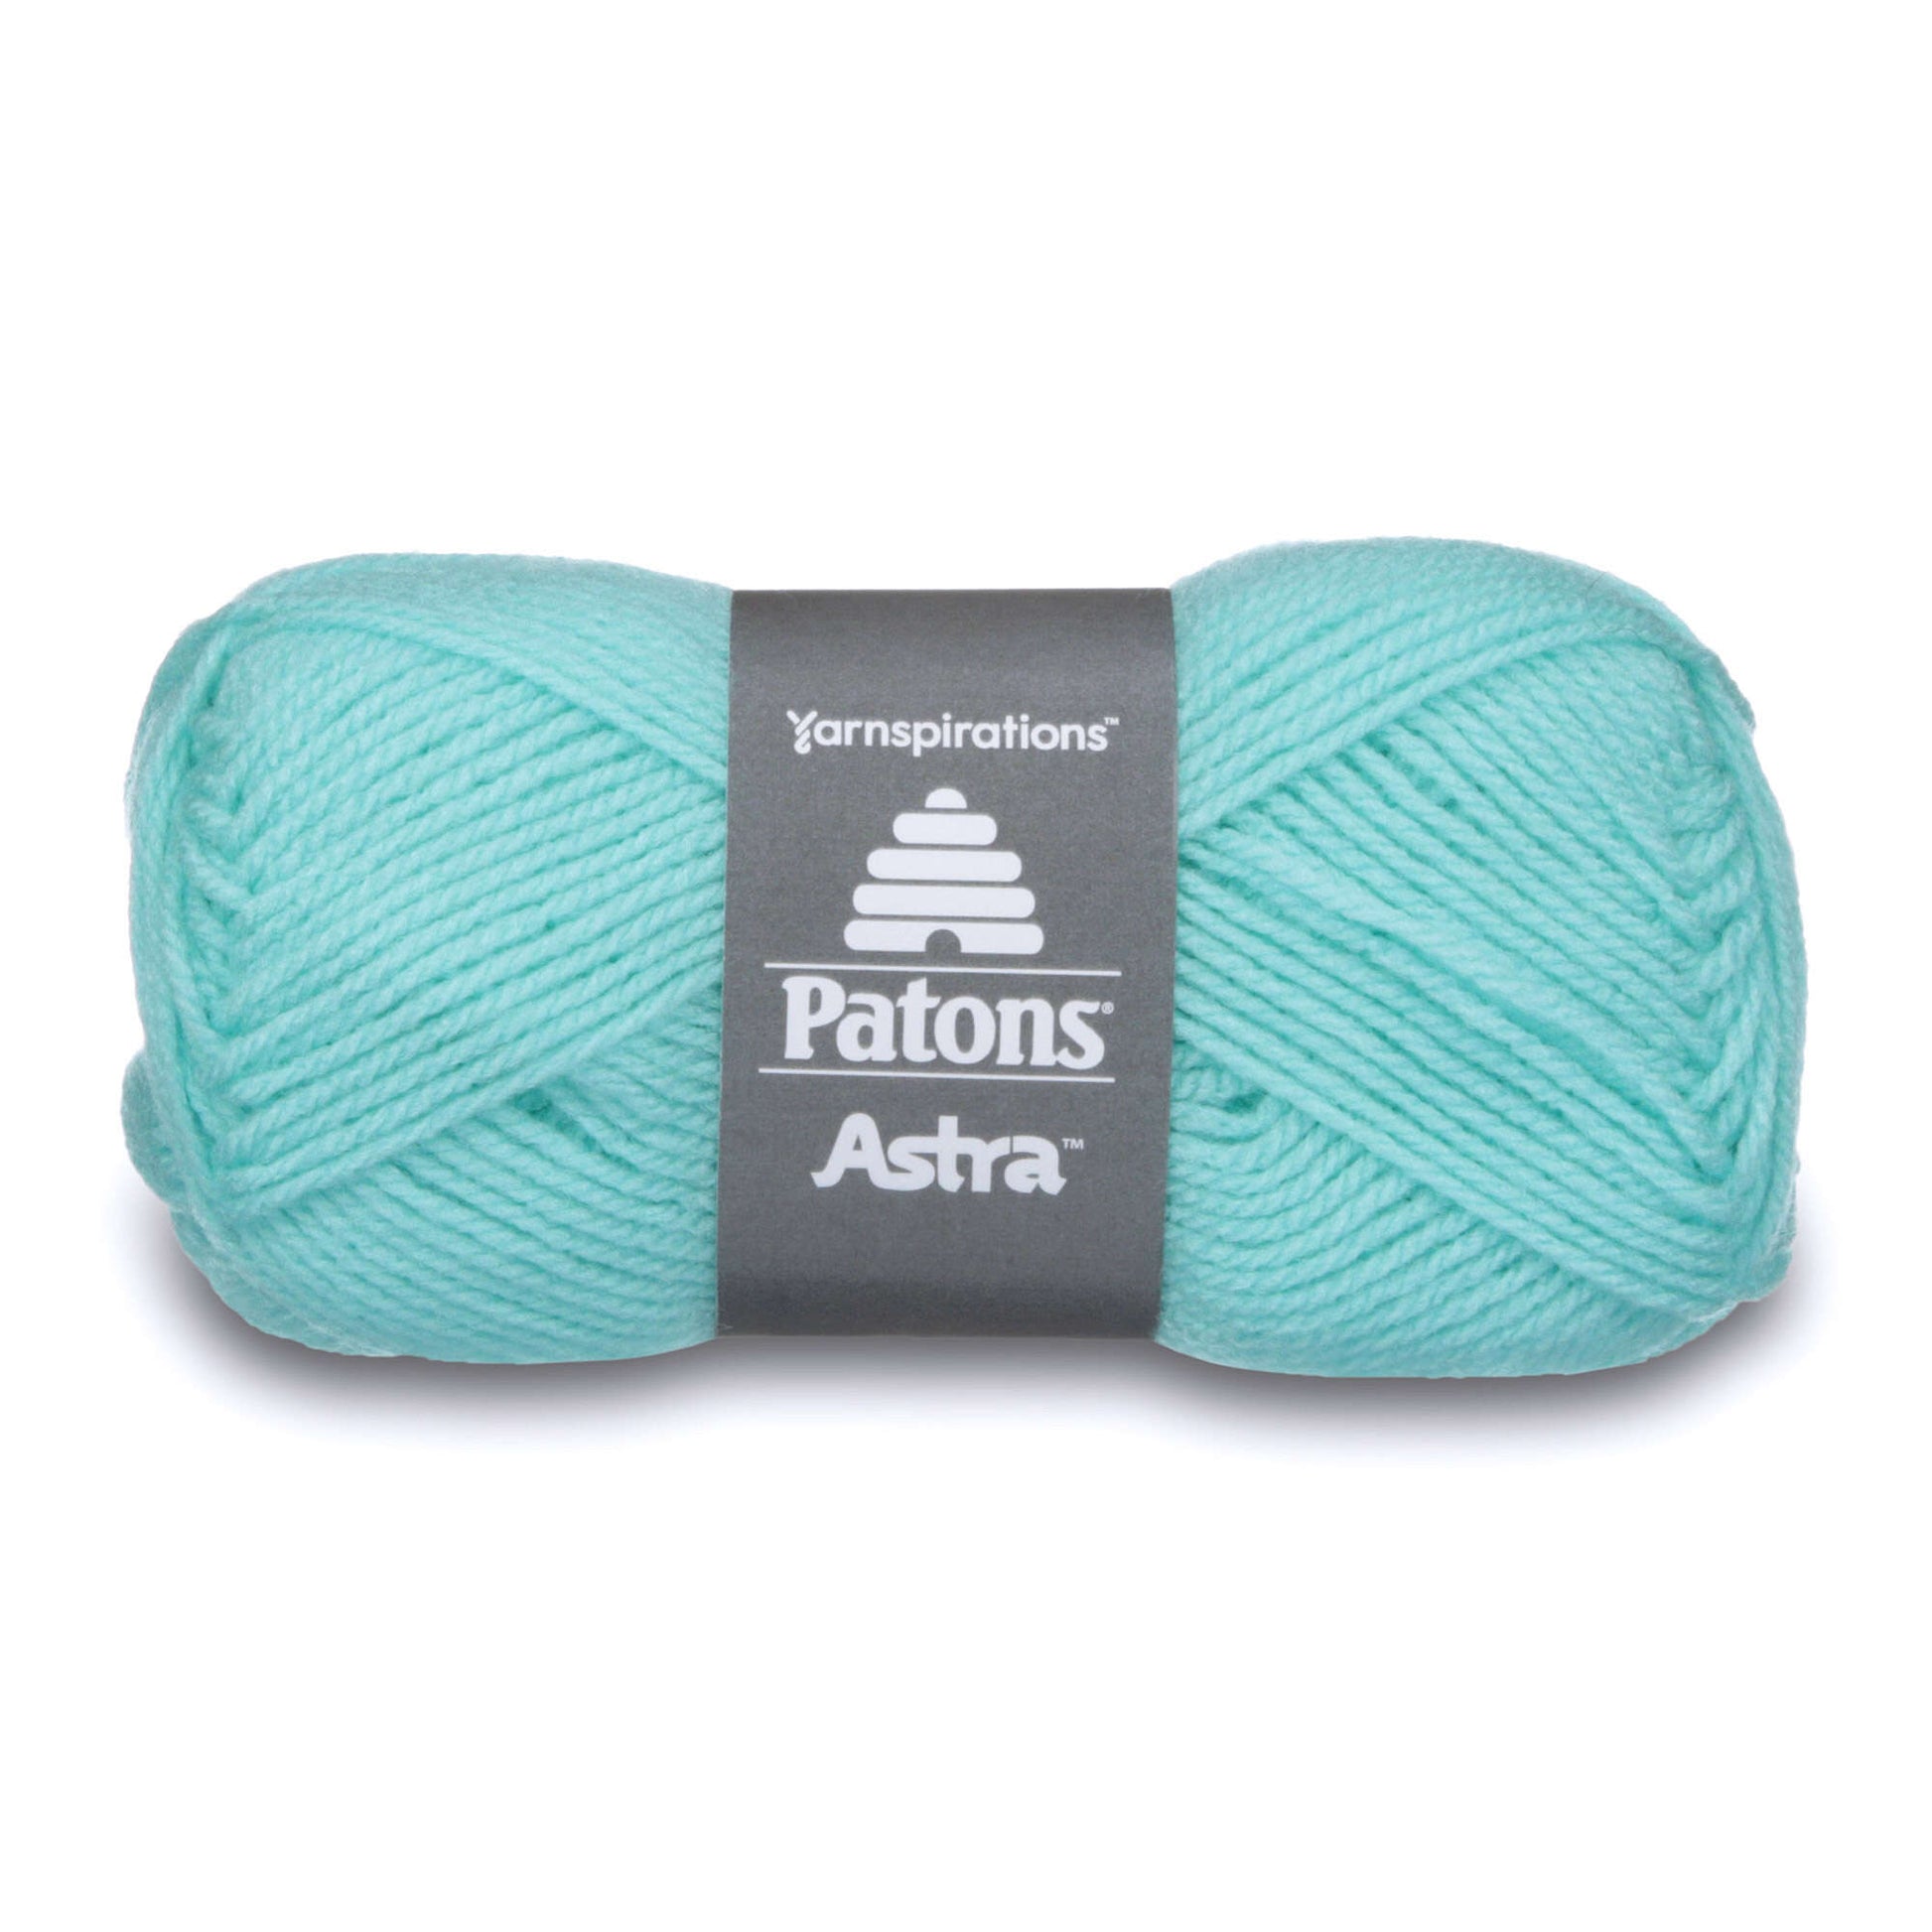 Patons Astra Yarn - Discontinued Shades